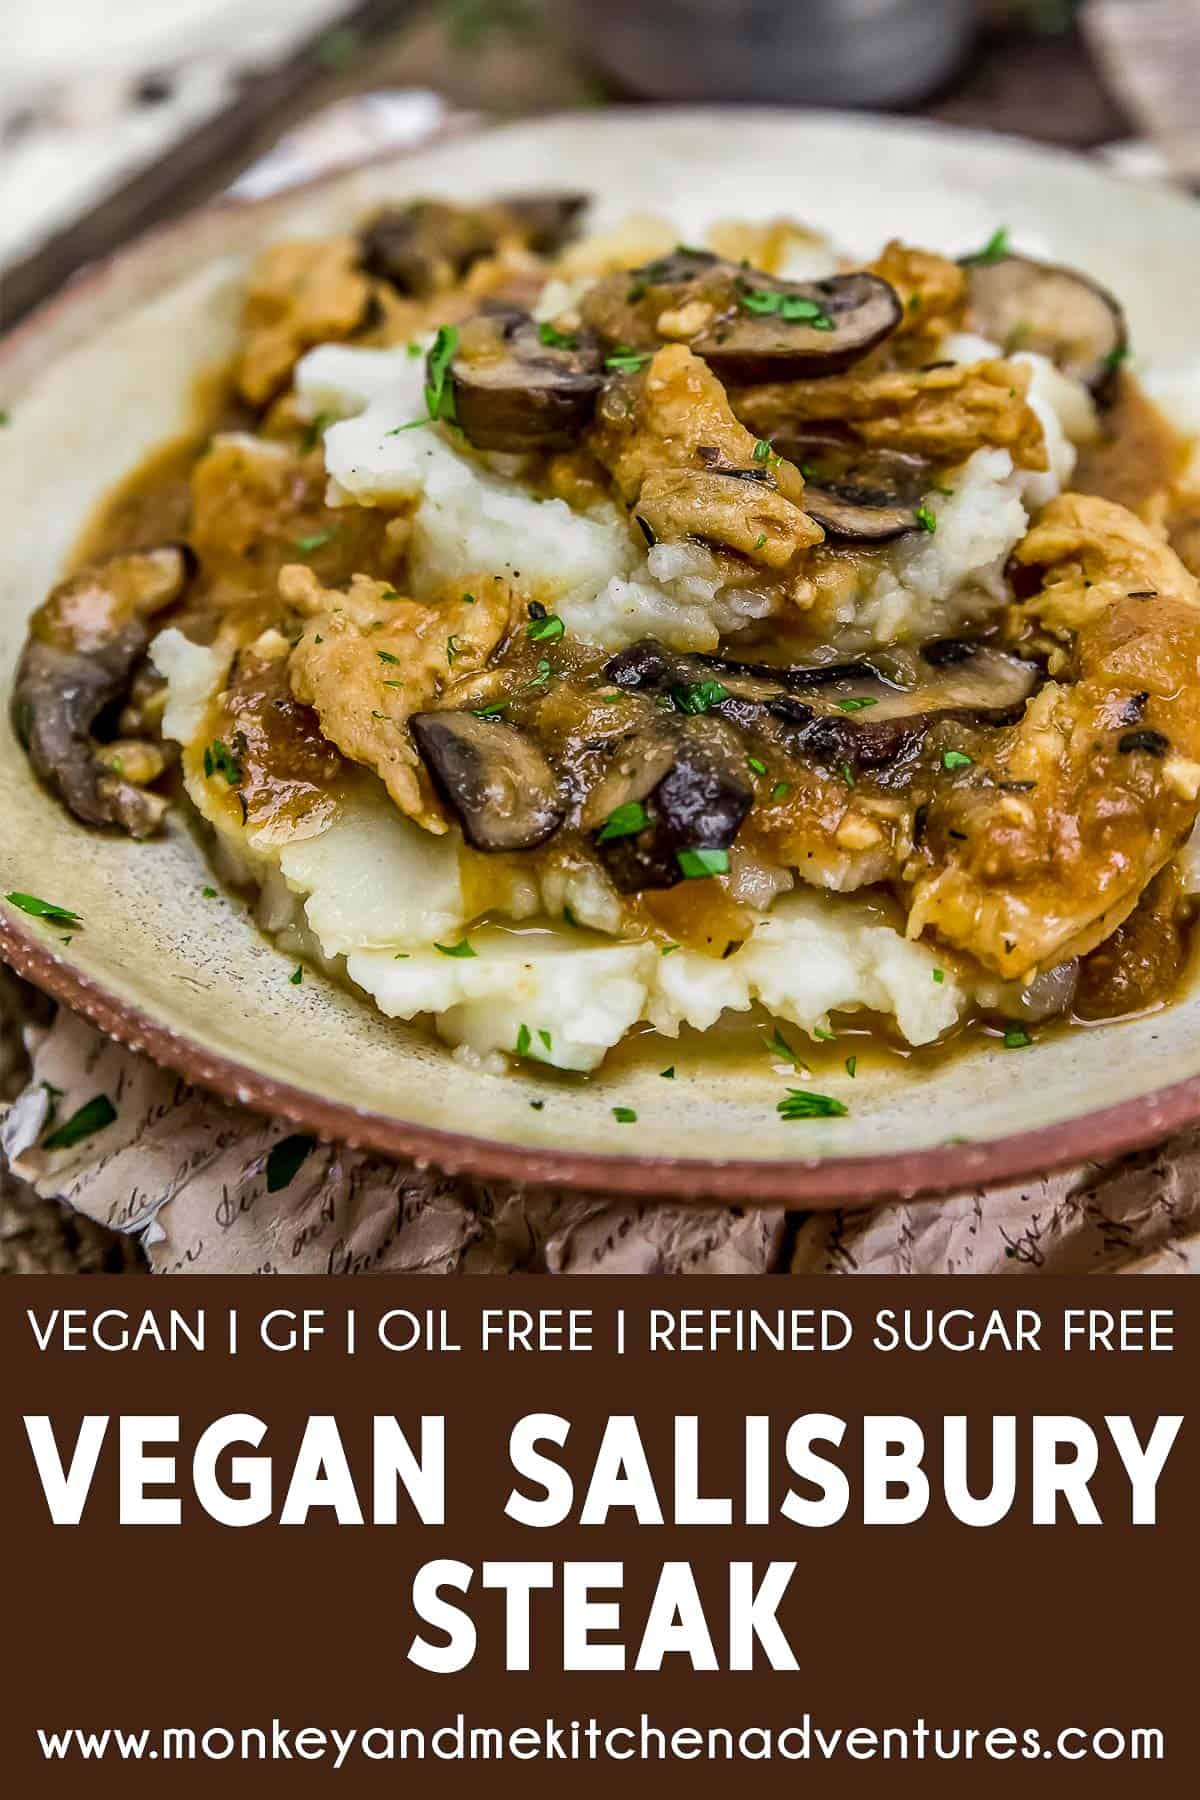 Vegan Salisbury Steak with text description